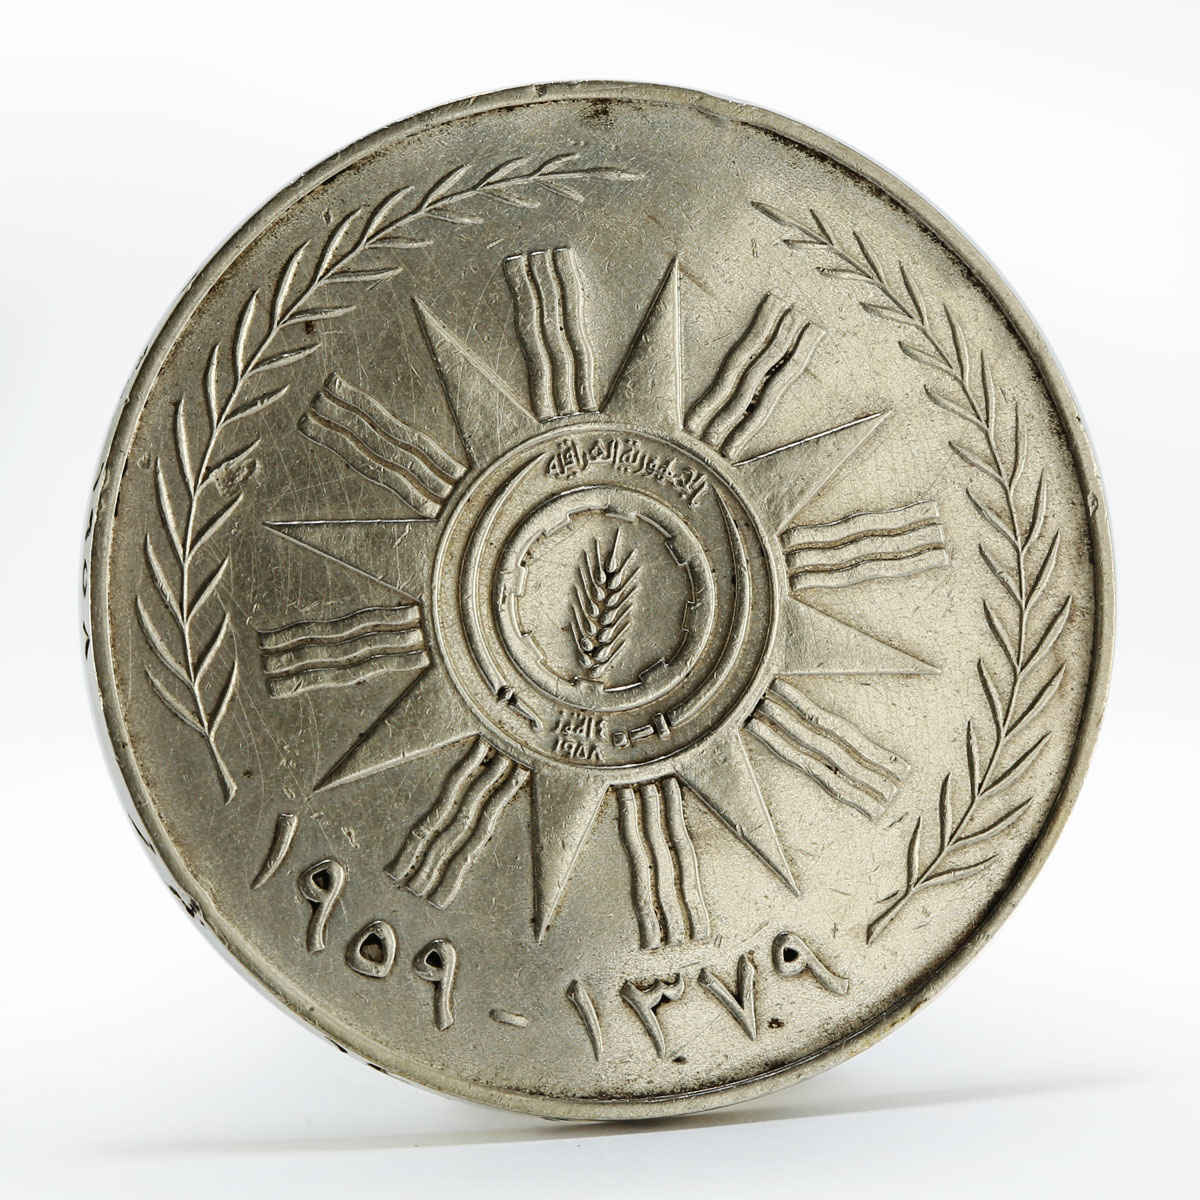 Iraq 500 fils Anniversary of 14 July Revolution silver coin 1959